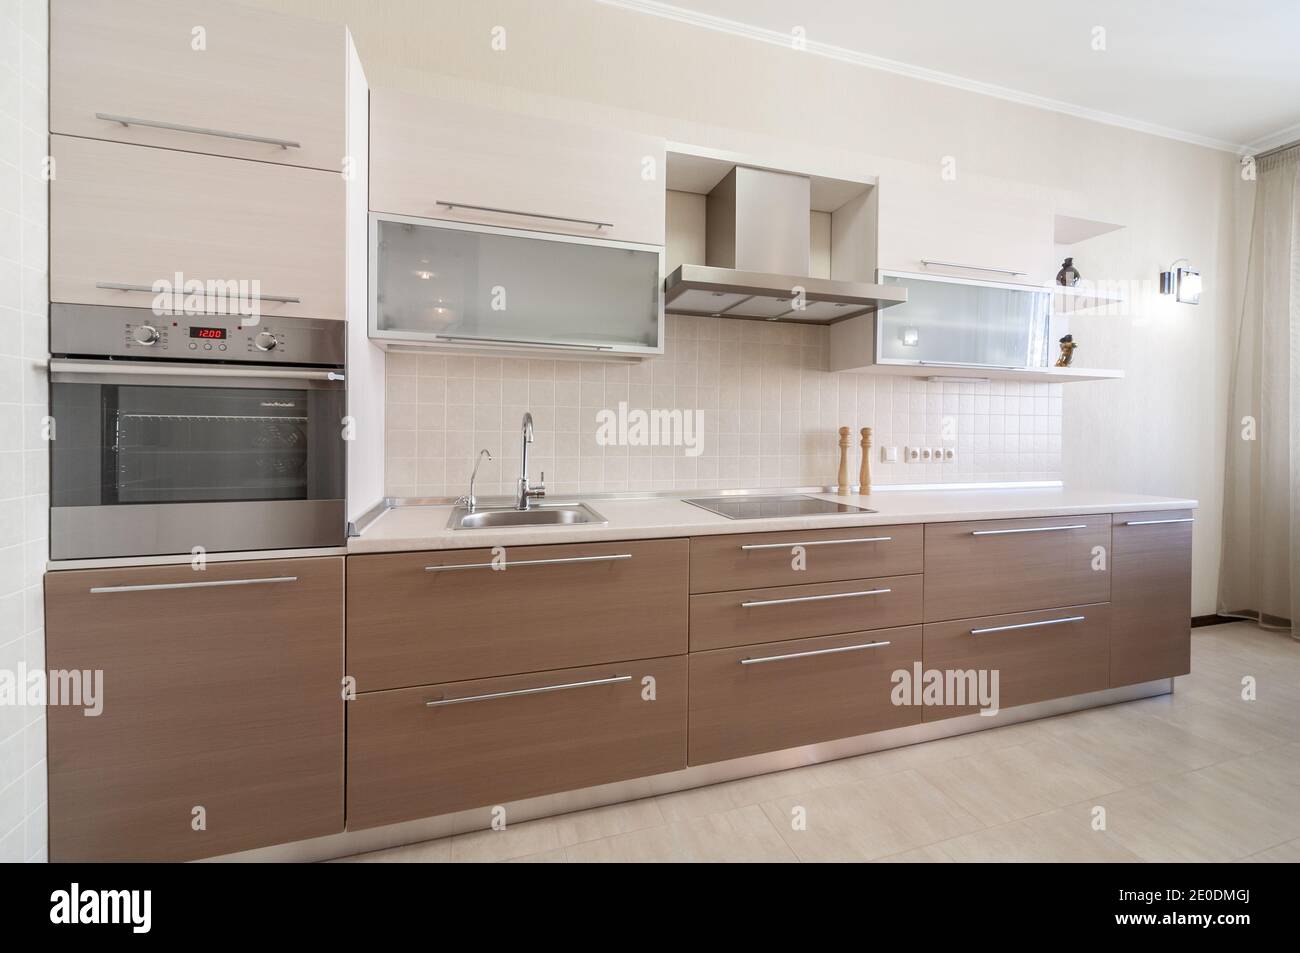 Modern kitchen interior with beige and light brown faсade pannels. Kitchen design concept Stock Photo